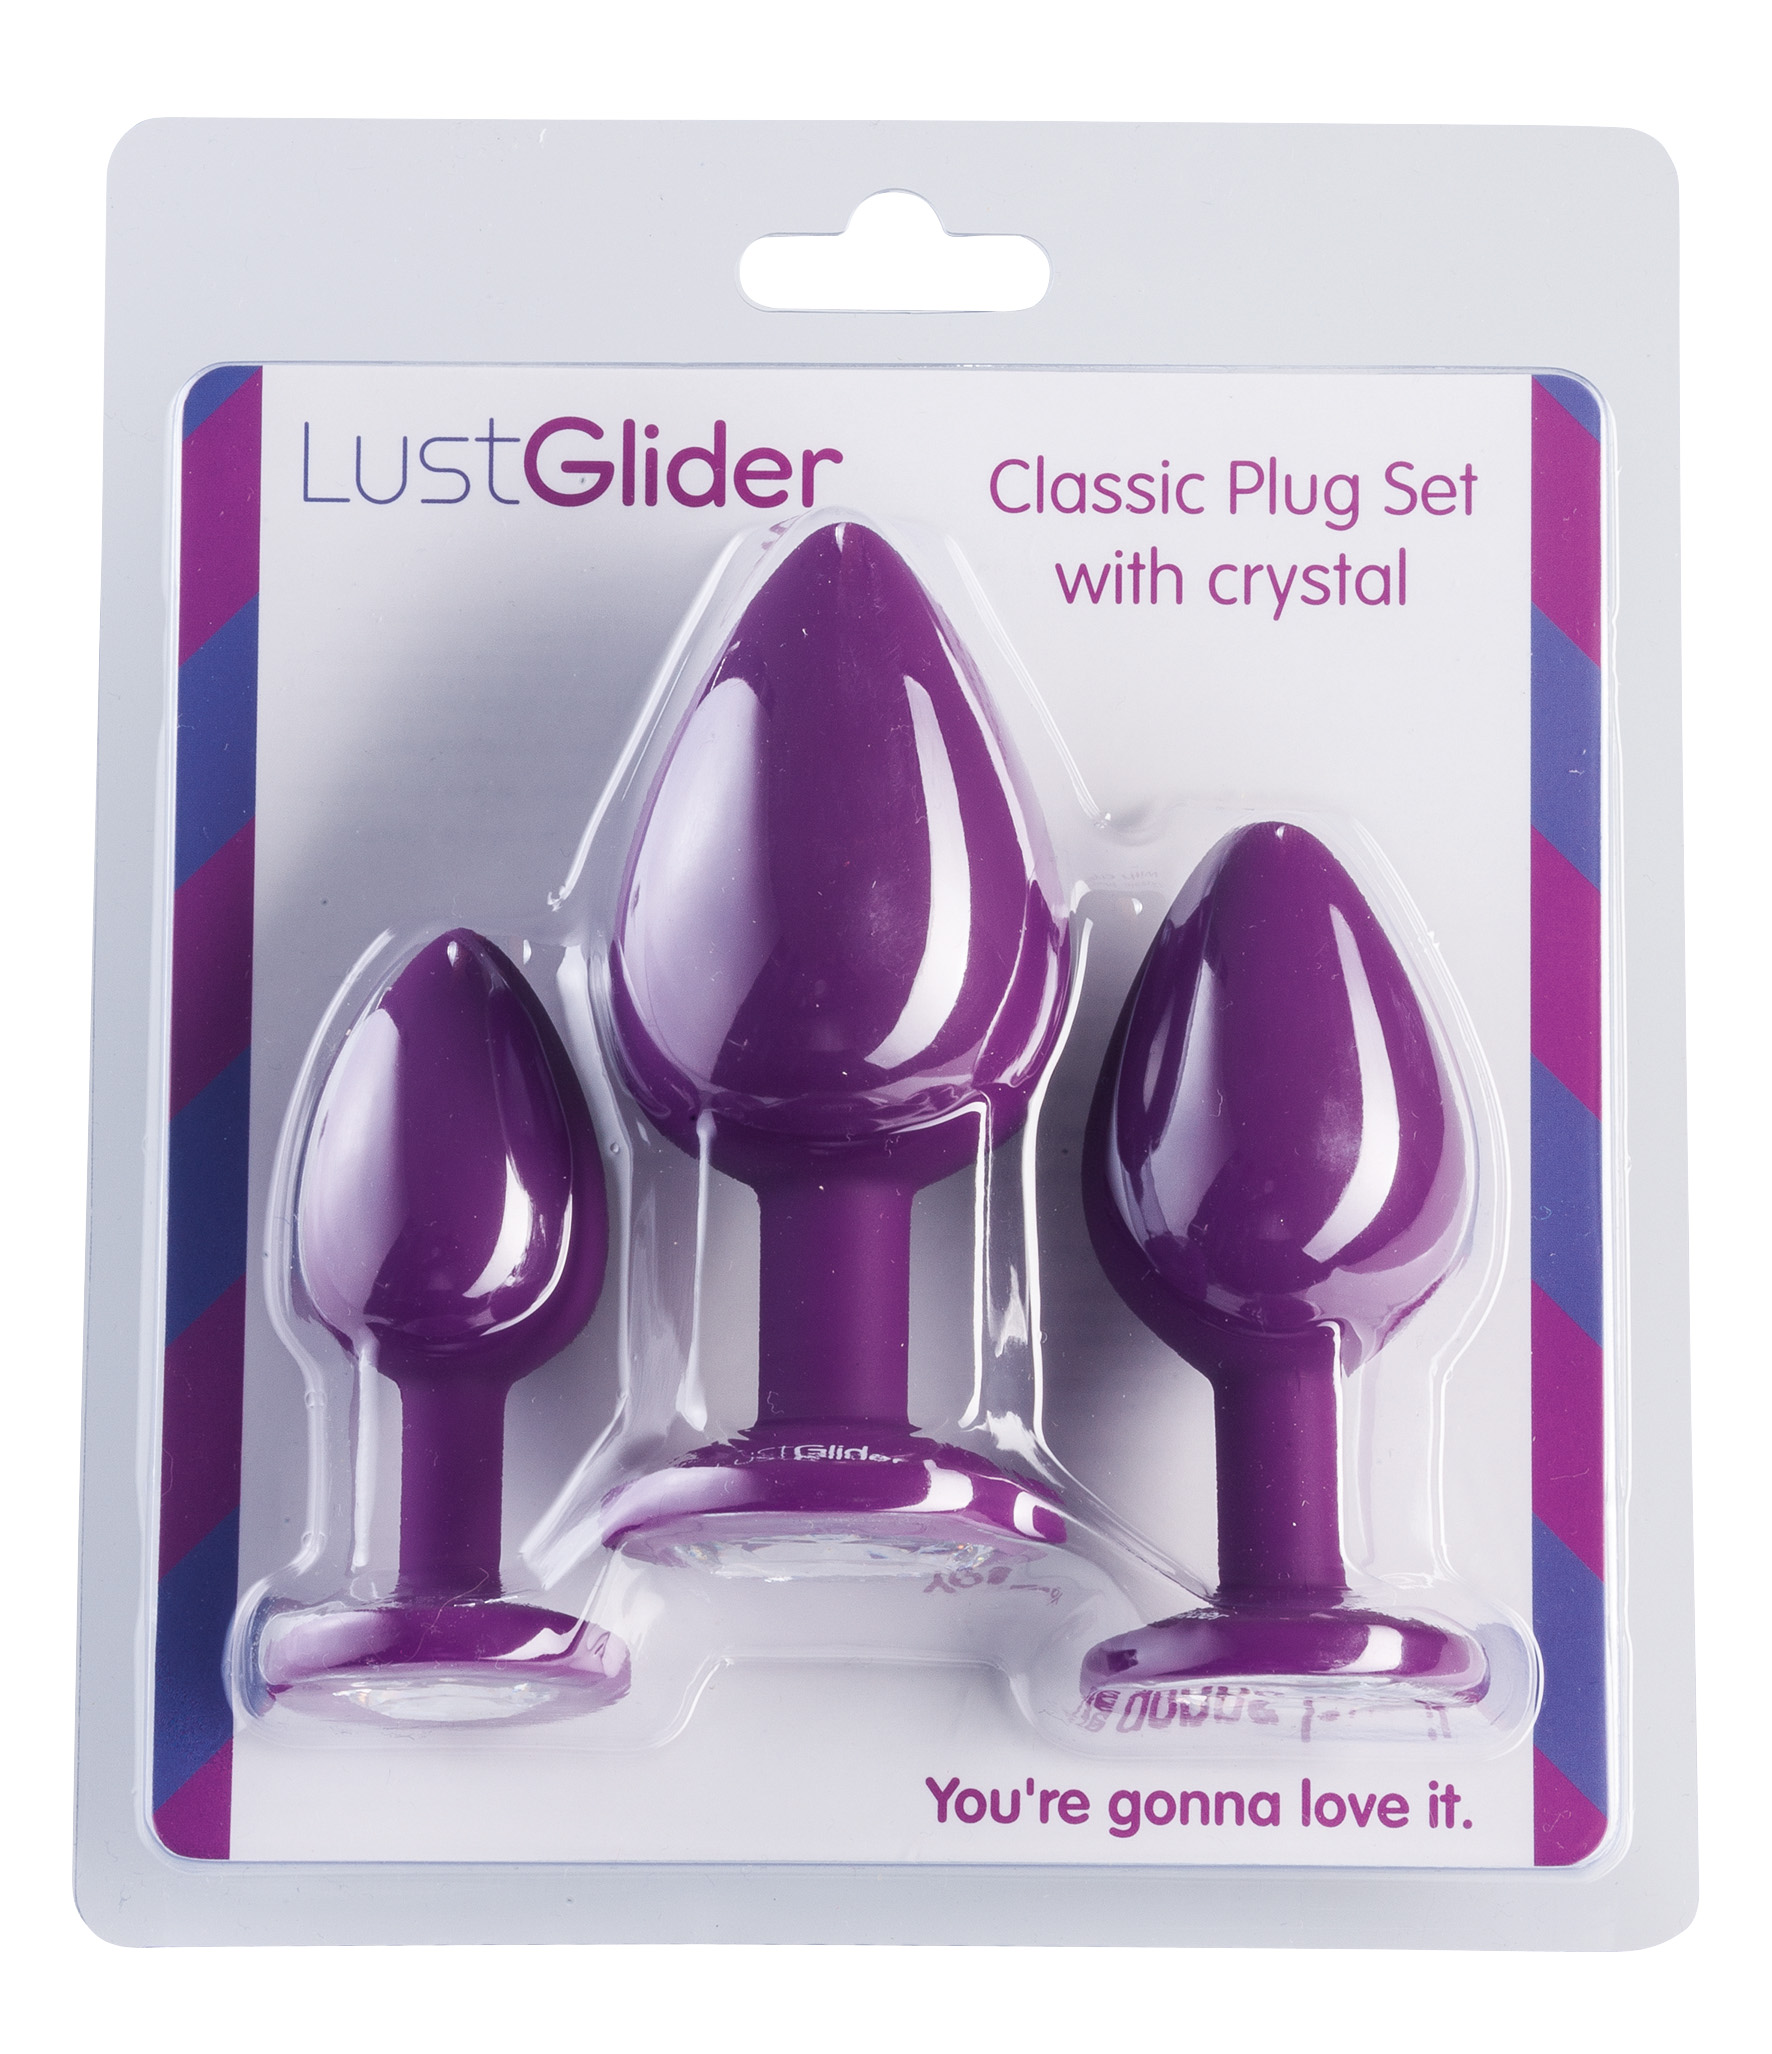 LustGlider Classic Plug Set with crystal